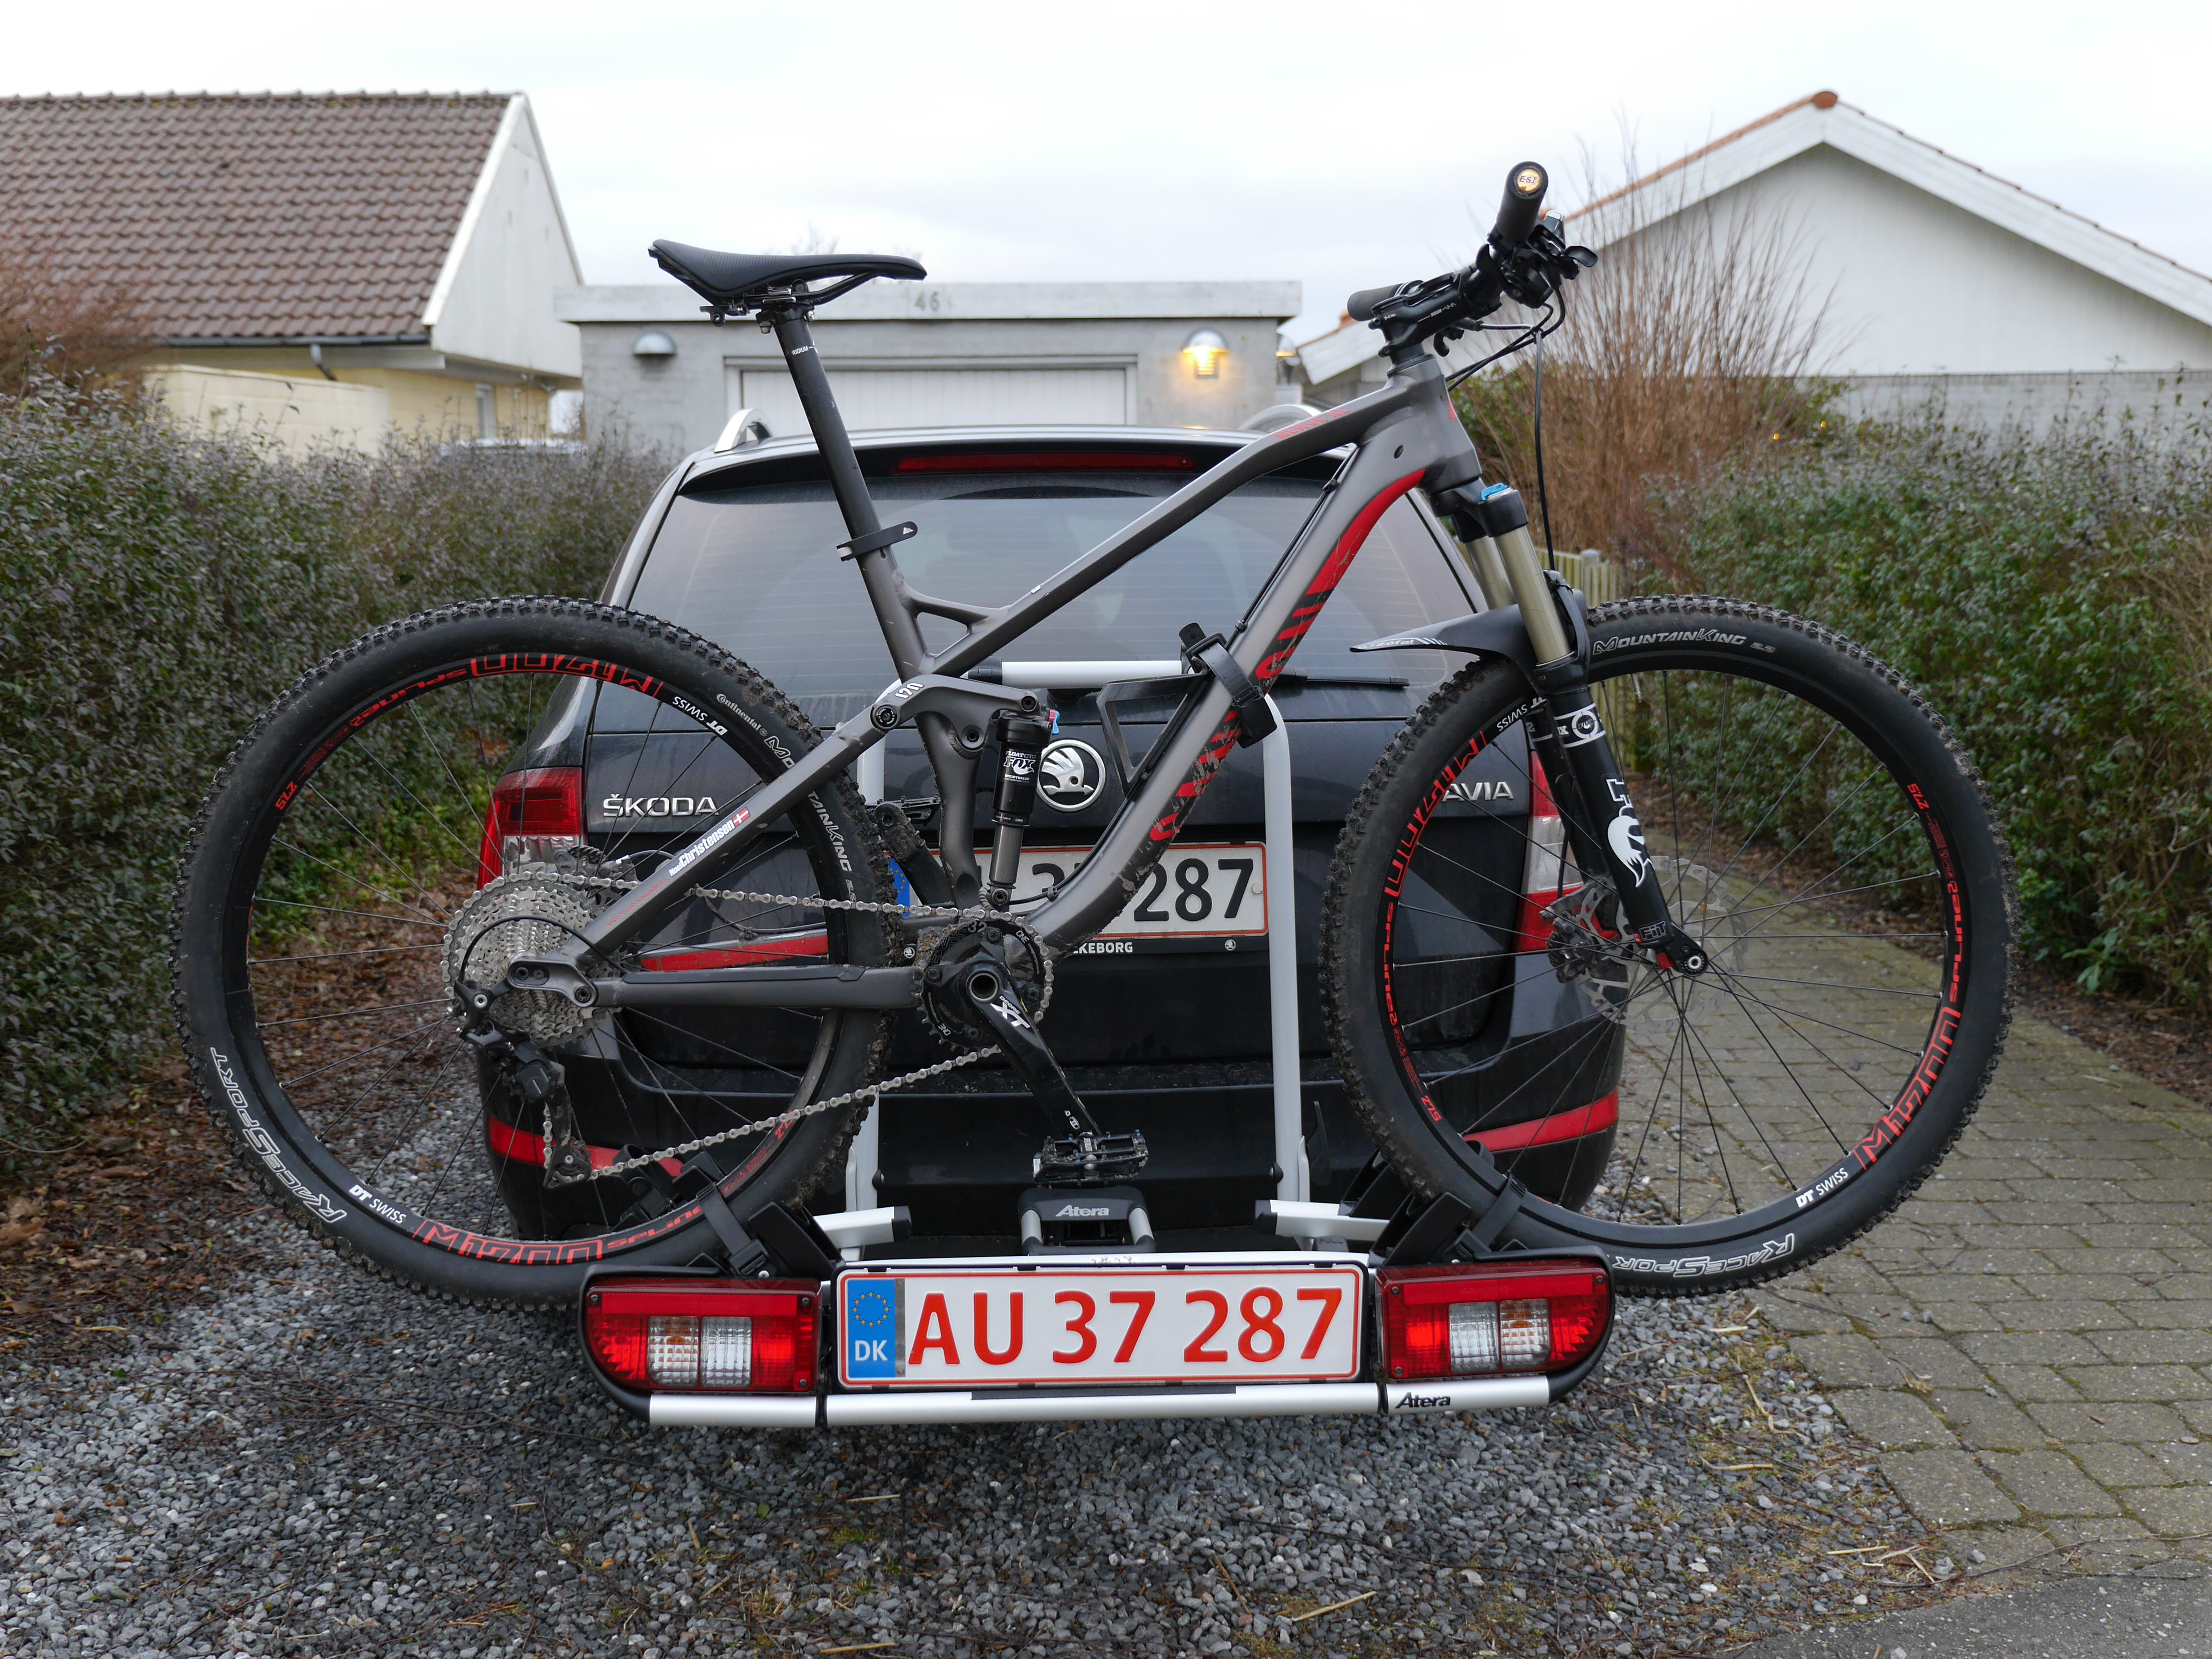 Test: Atera Strada Sport E-Bike cykelholder CykelStart.dk